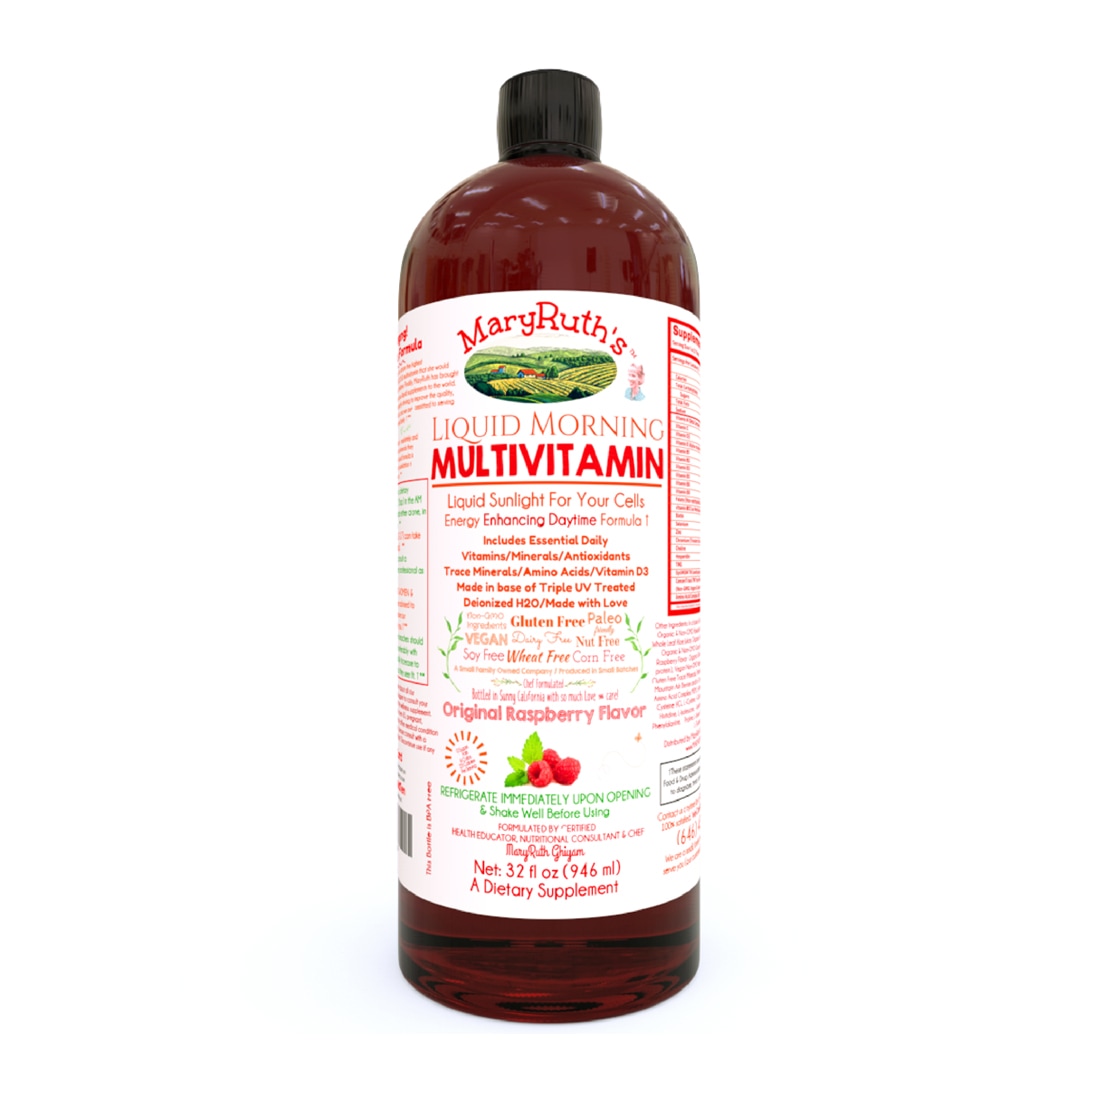 mary-ruth-organics-vegan-plant-based-liquid-morning-multivitamin-bottle-front